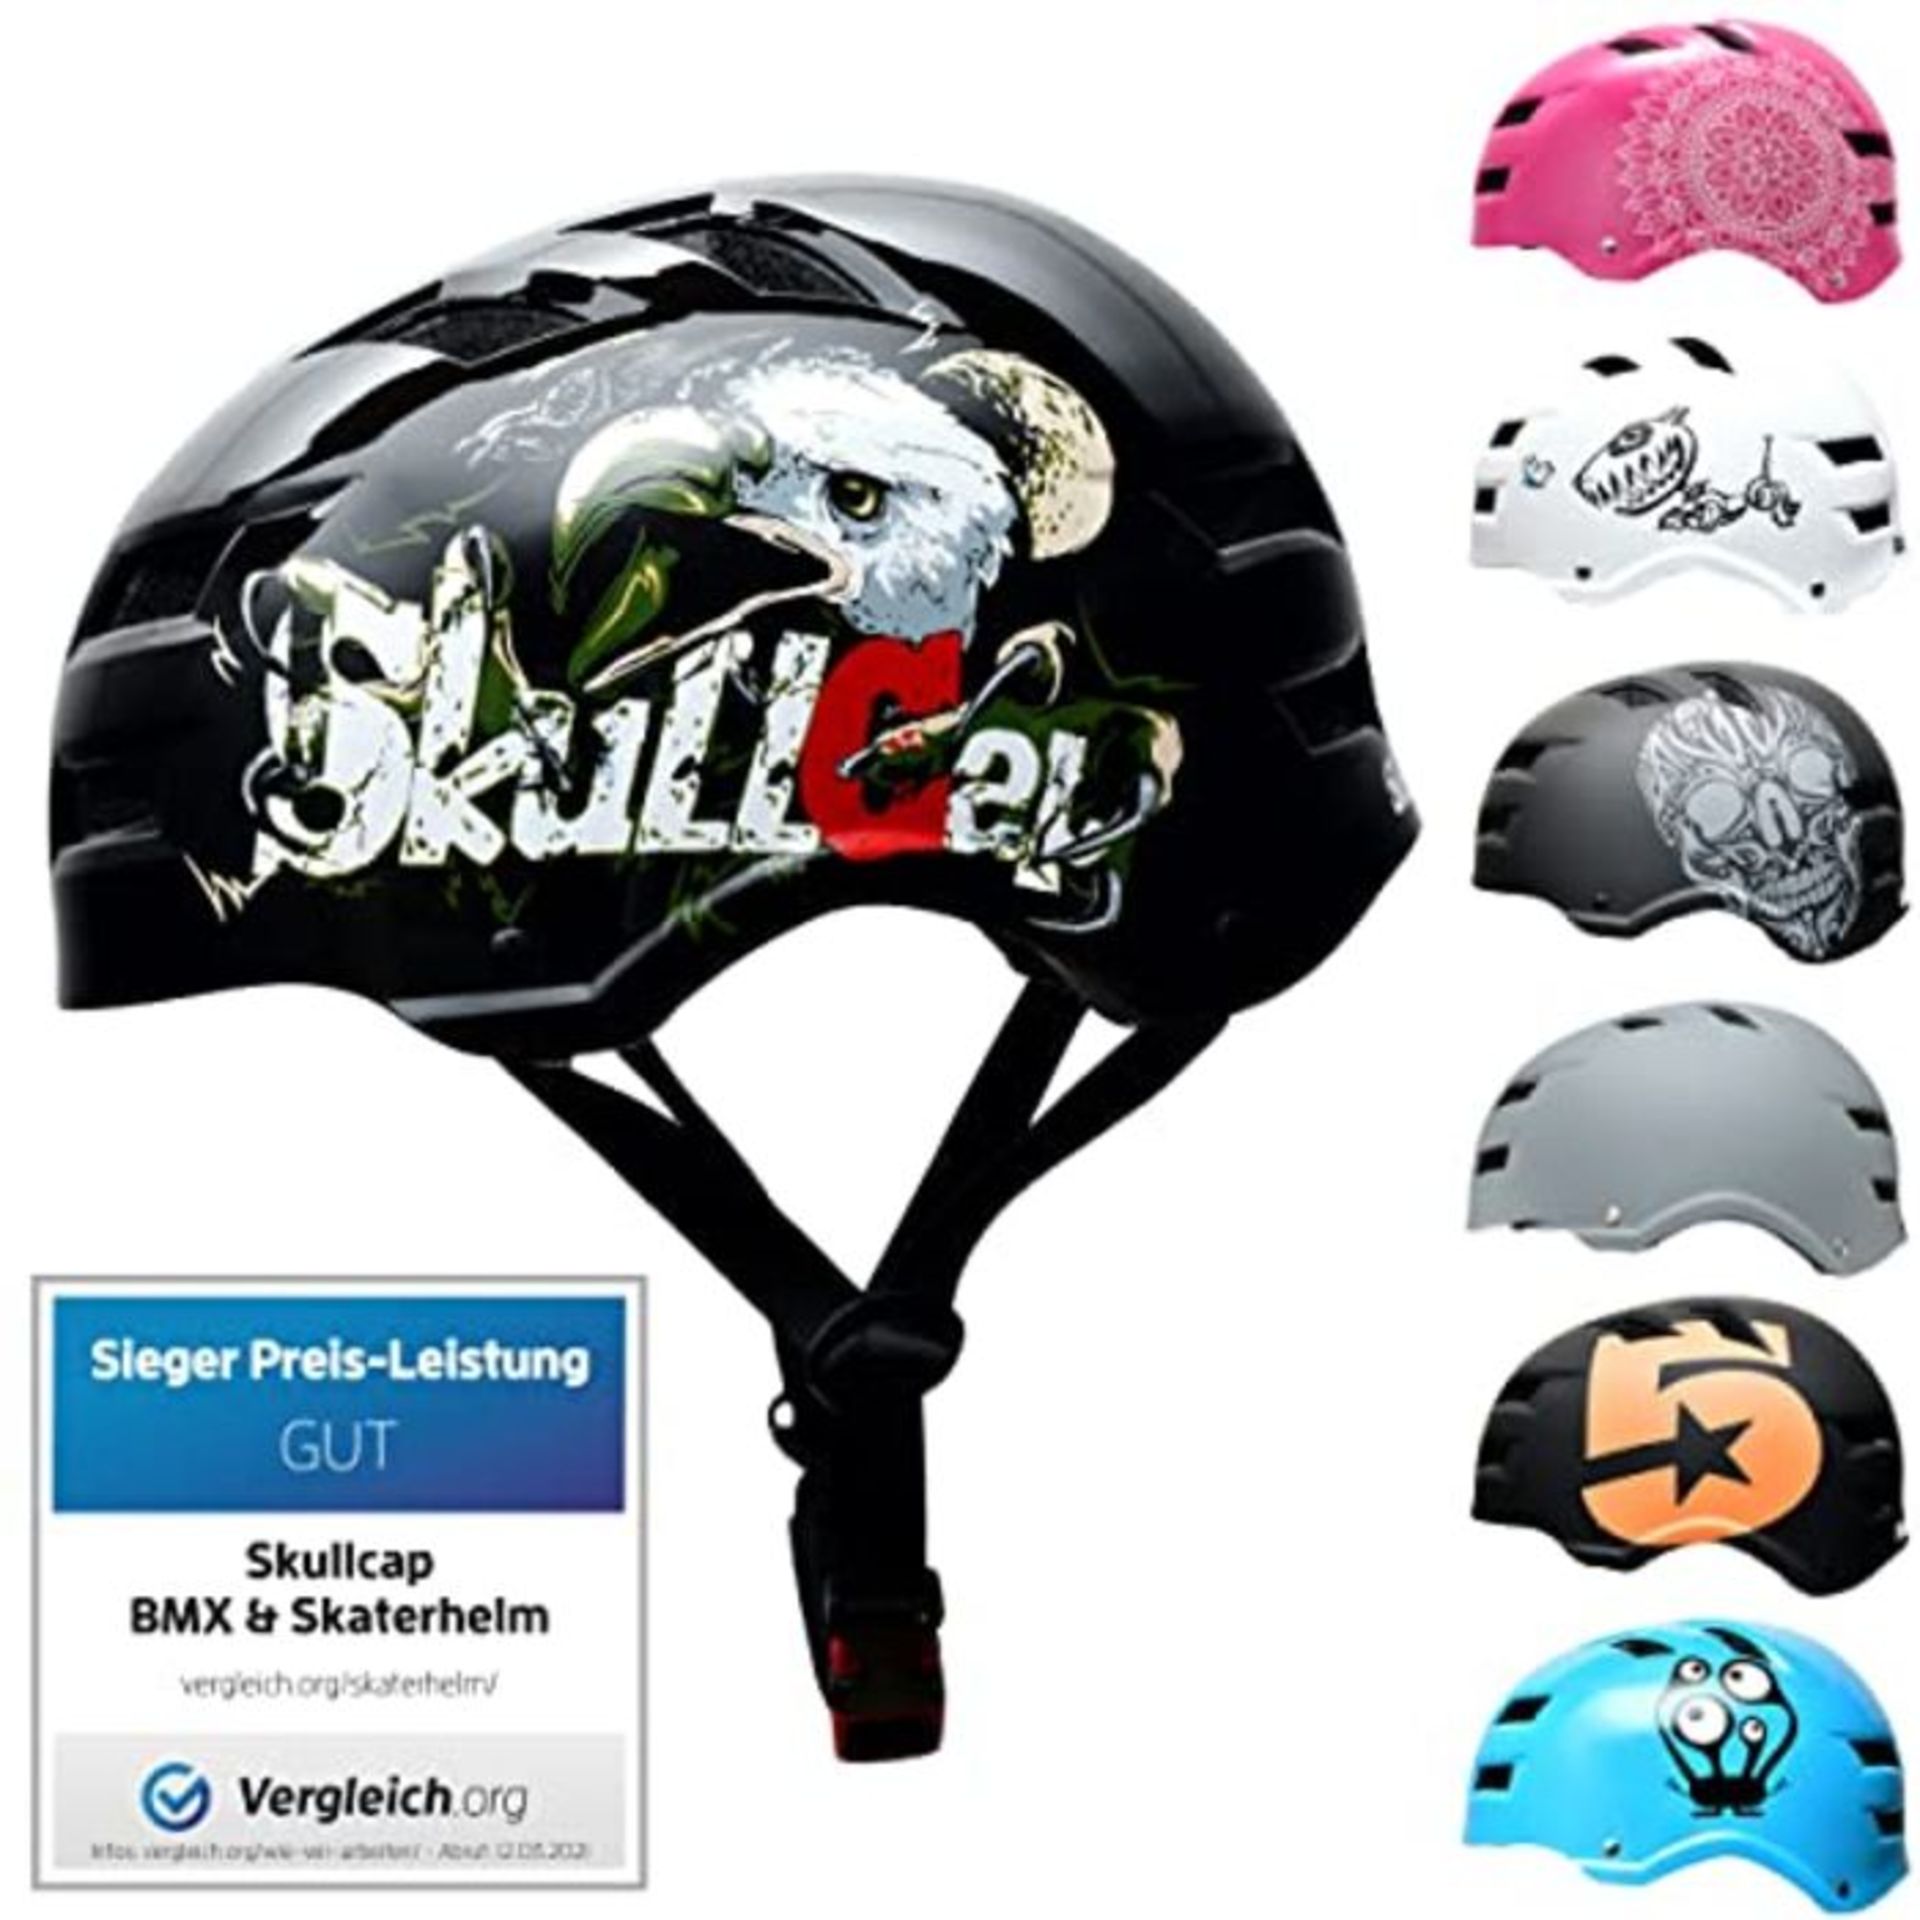 Skull-C Skateboard & BMX-Bike Helmet Youth & Adults - 30 Designs, Glossy Black Eagle,